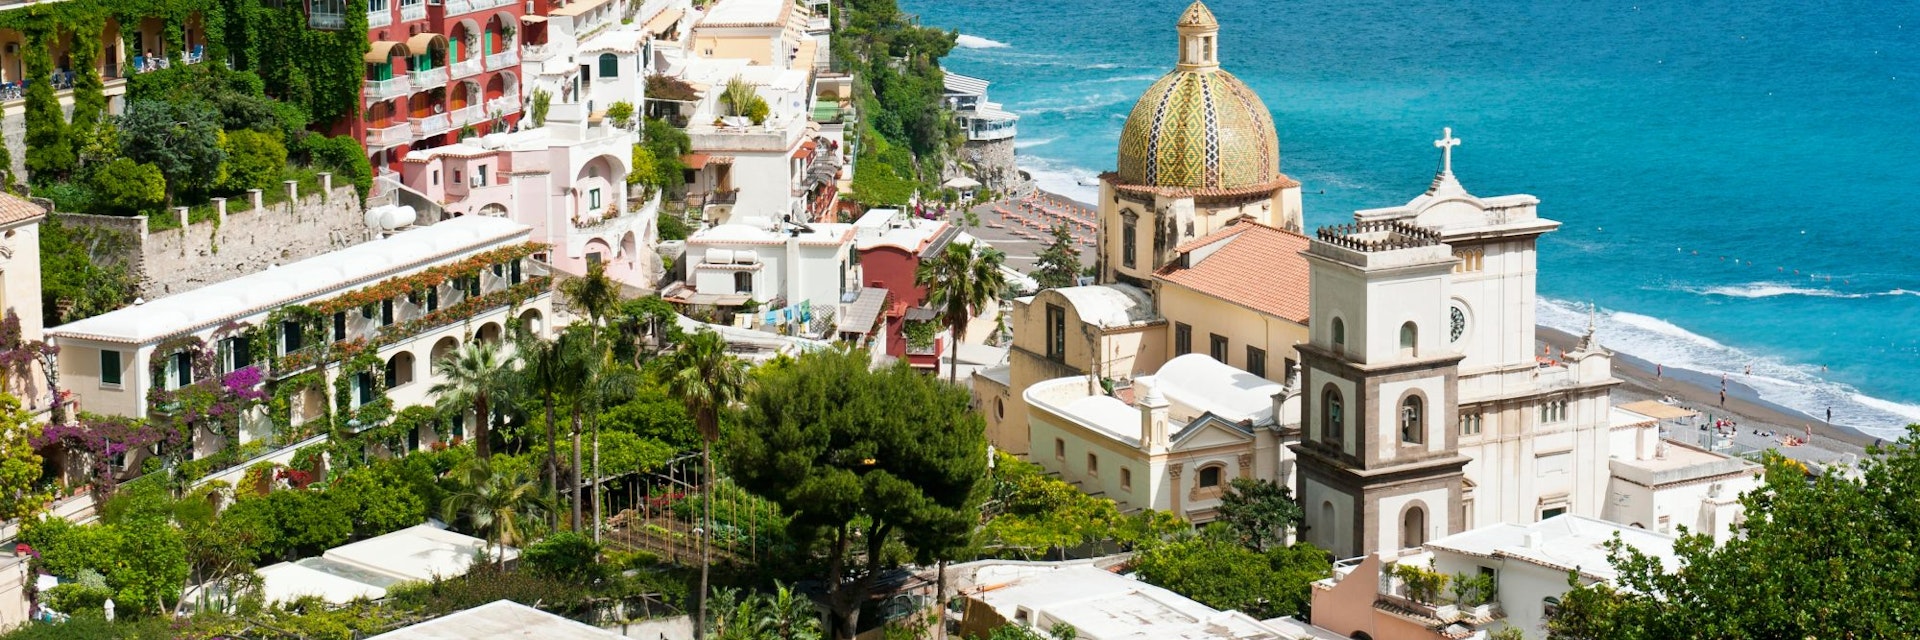 View of Positano with Chiesa di Santa Maria Assunta Church, Positano, Salerno, Amalfi Coast, Campania, Italy - stock photo
